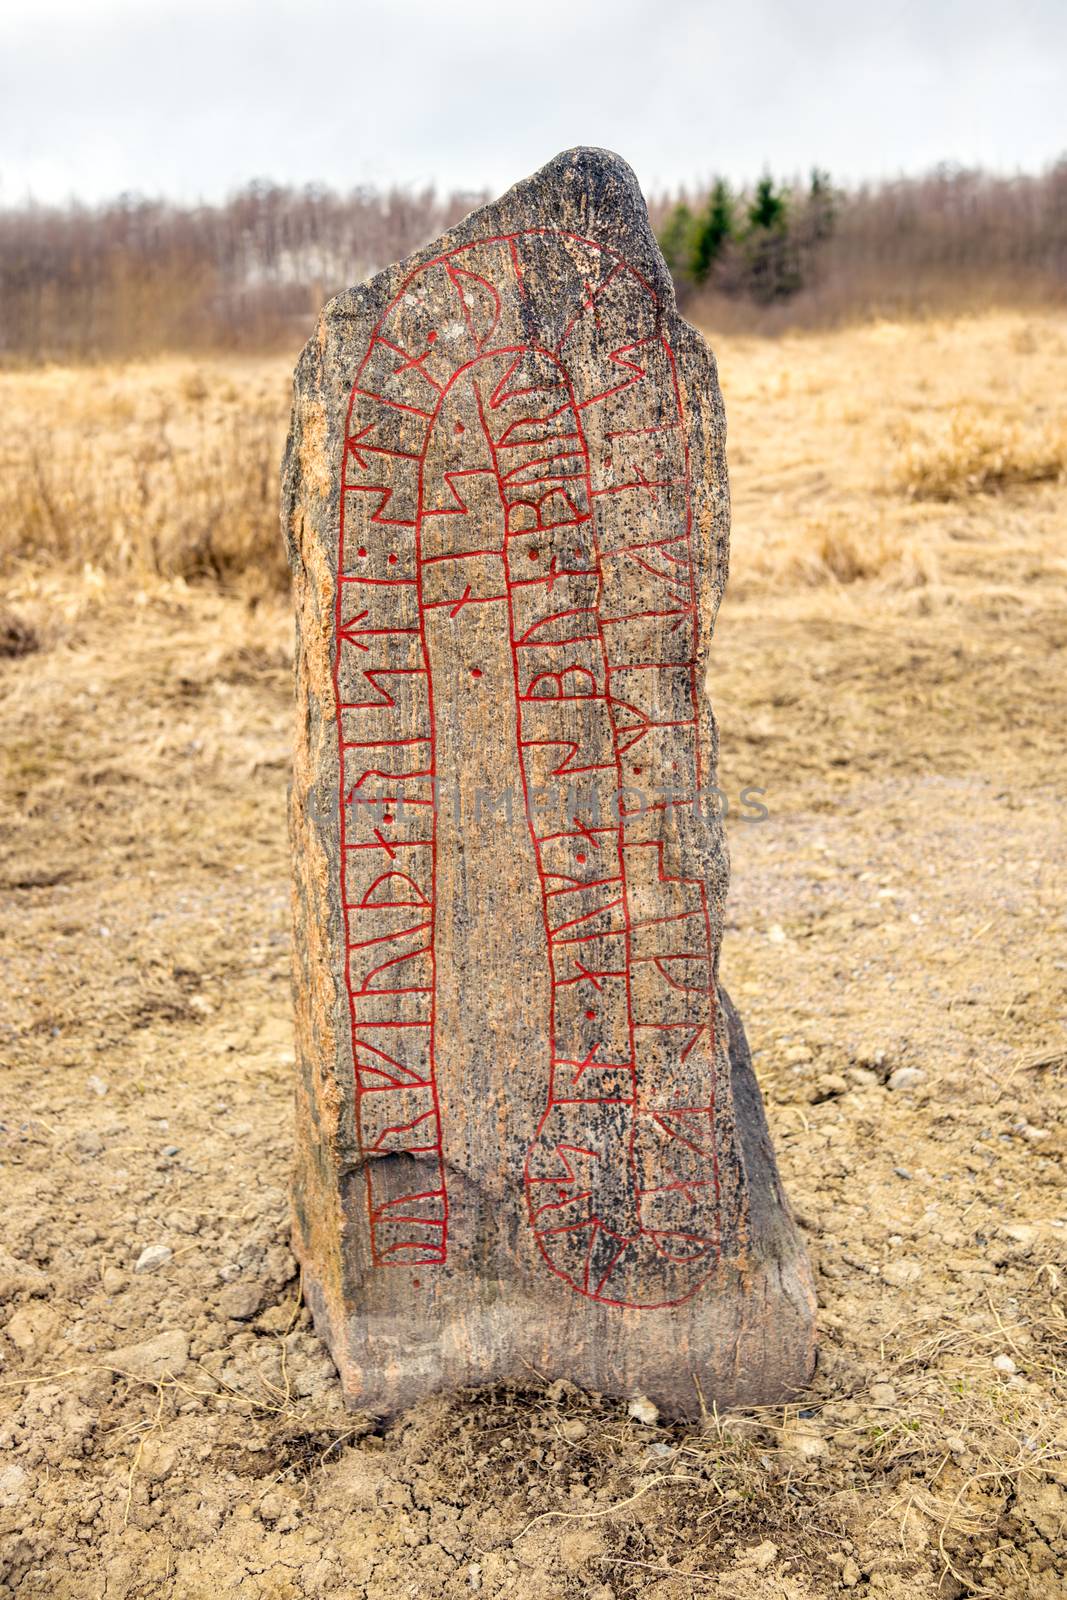 Runestone by thomas_males